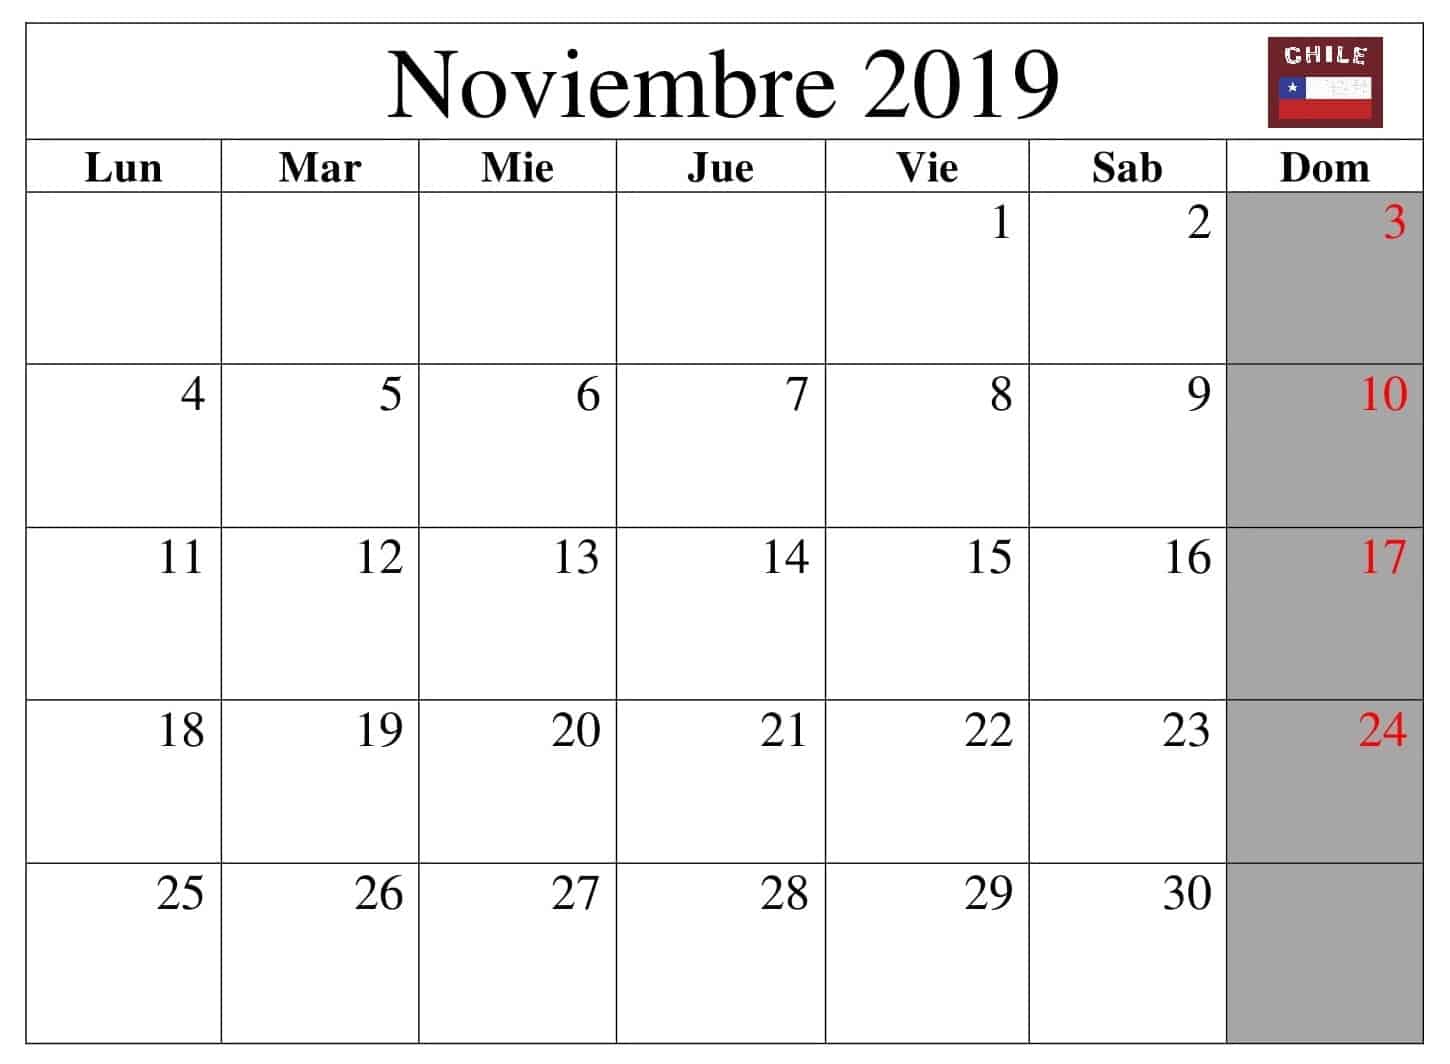  Calendario Noviembre 2019 Chile